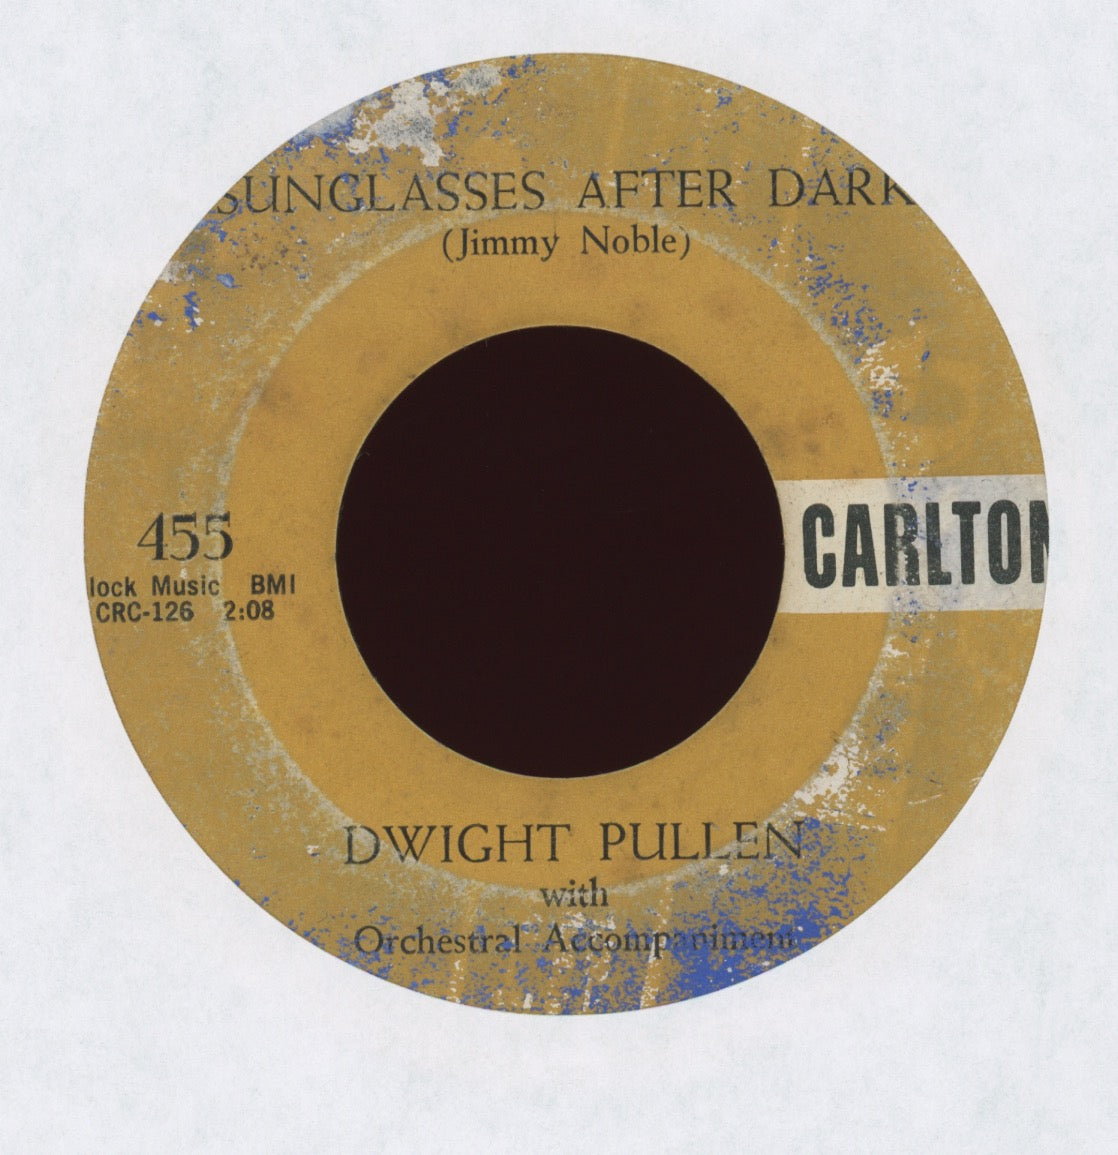 Dwight Pullen - Sunglasses After Dark on Carlton